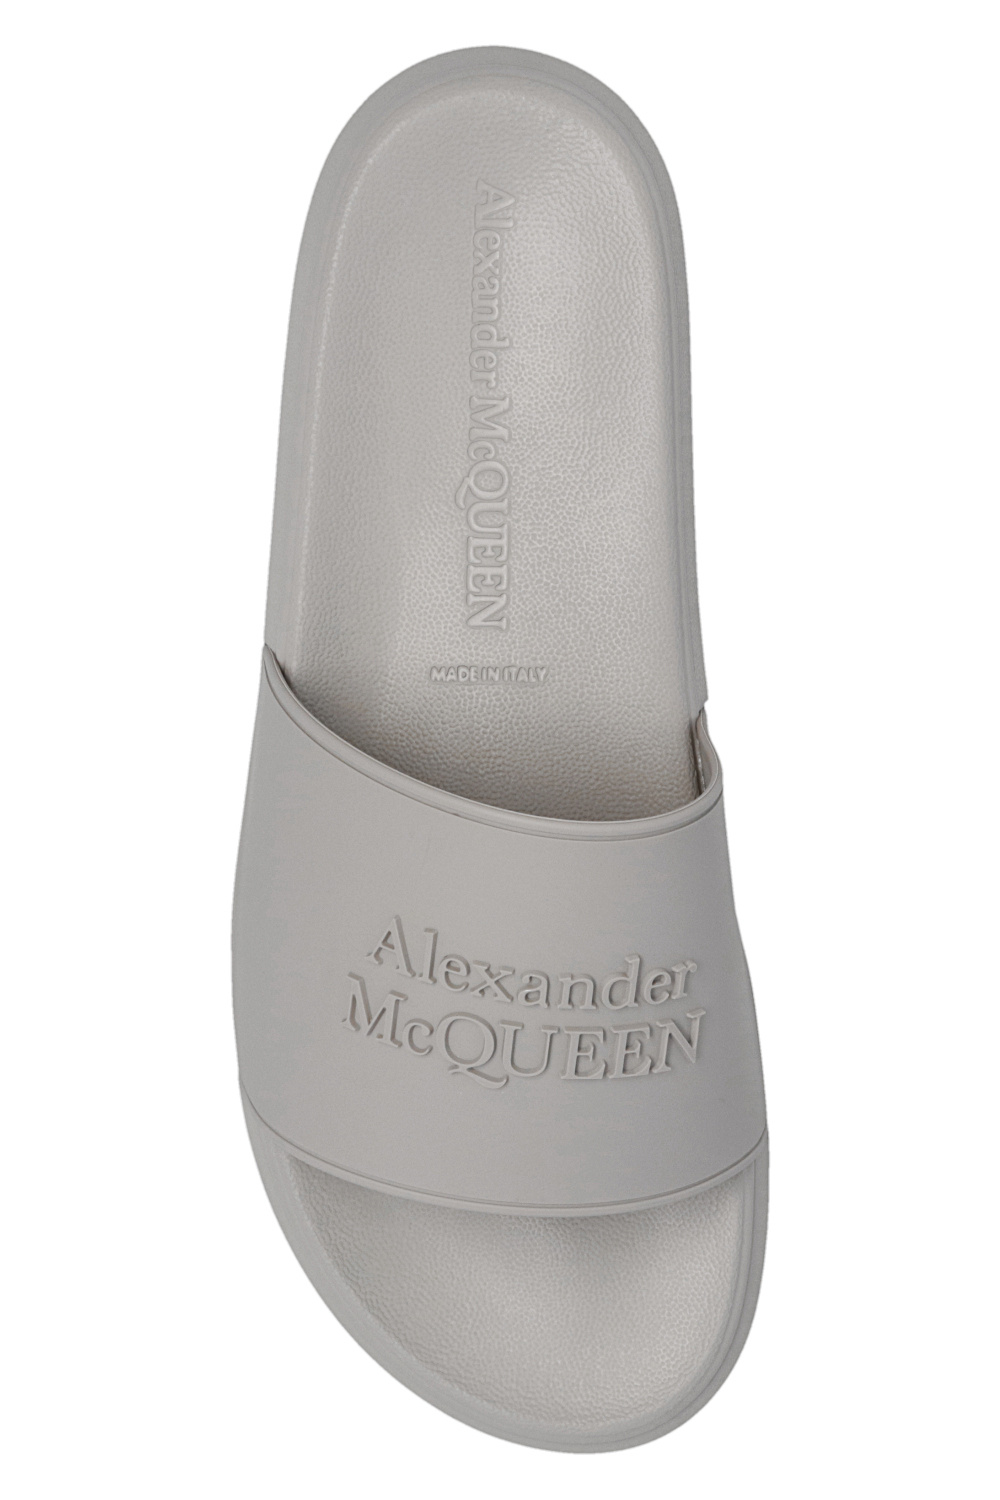 Alexander McQueen alexander mcqueen skull argyle socks item